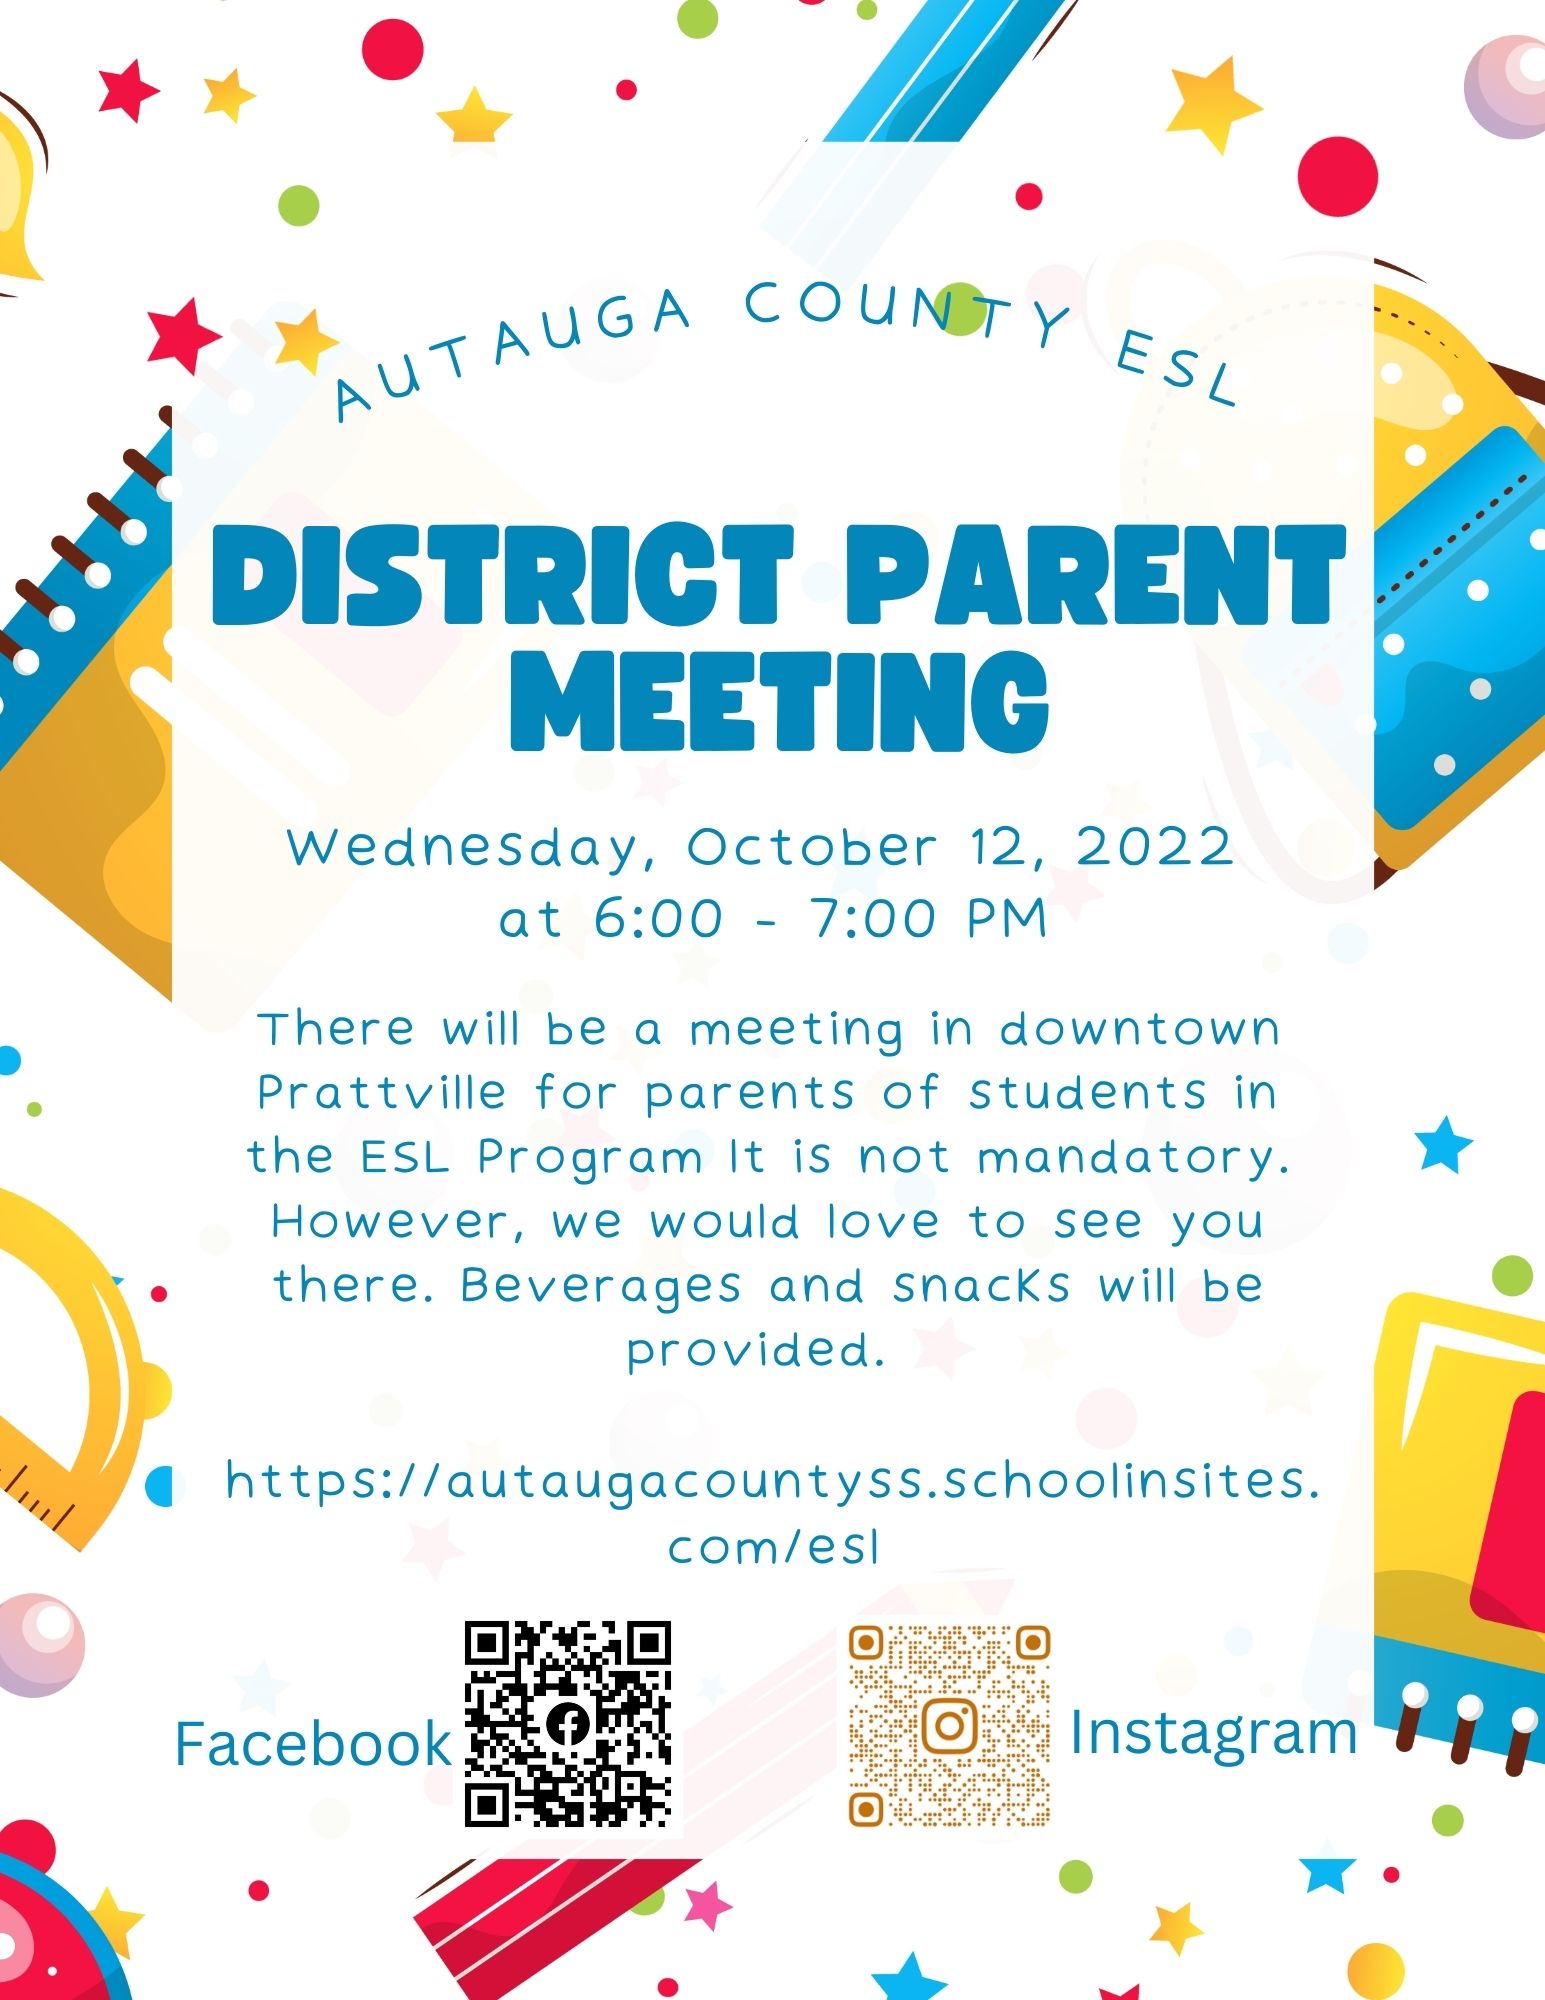 District Parent Meeting Inviatiaon